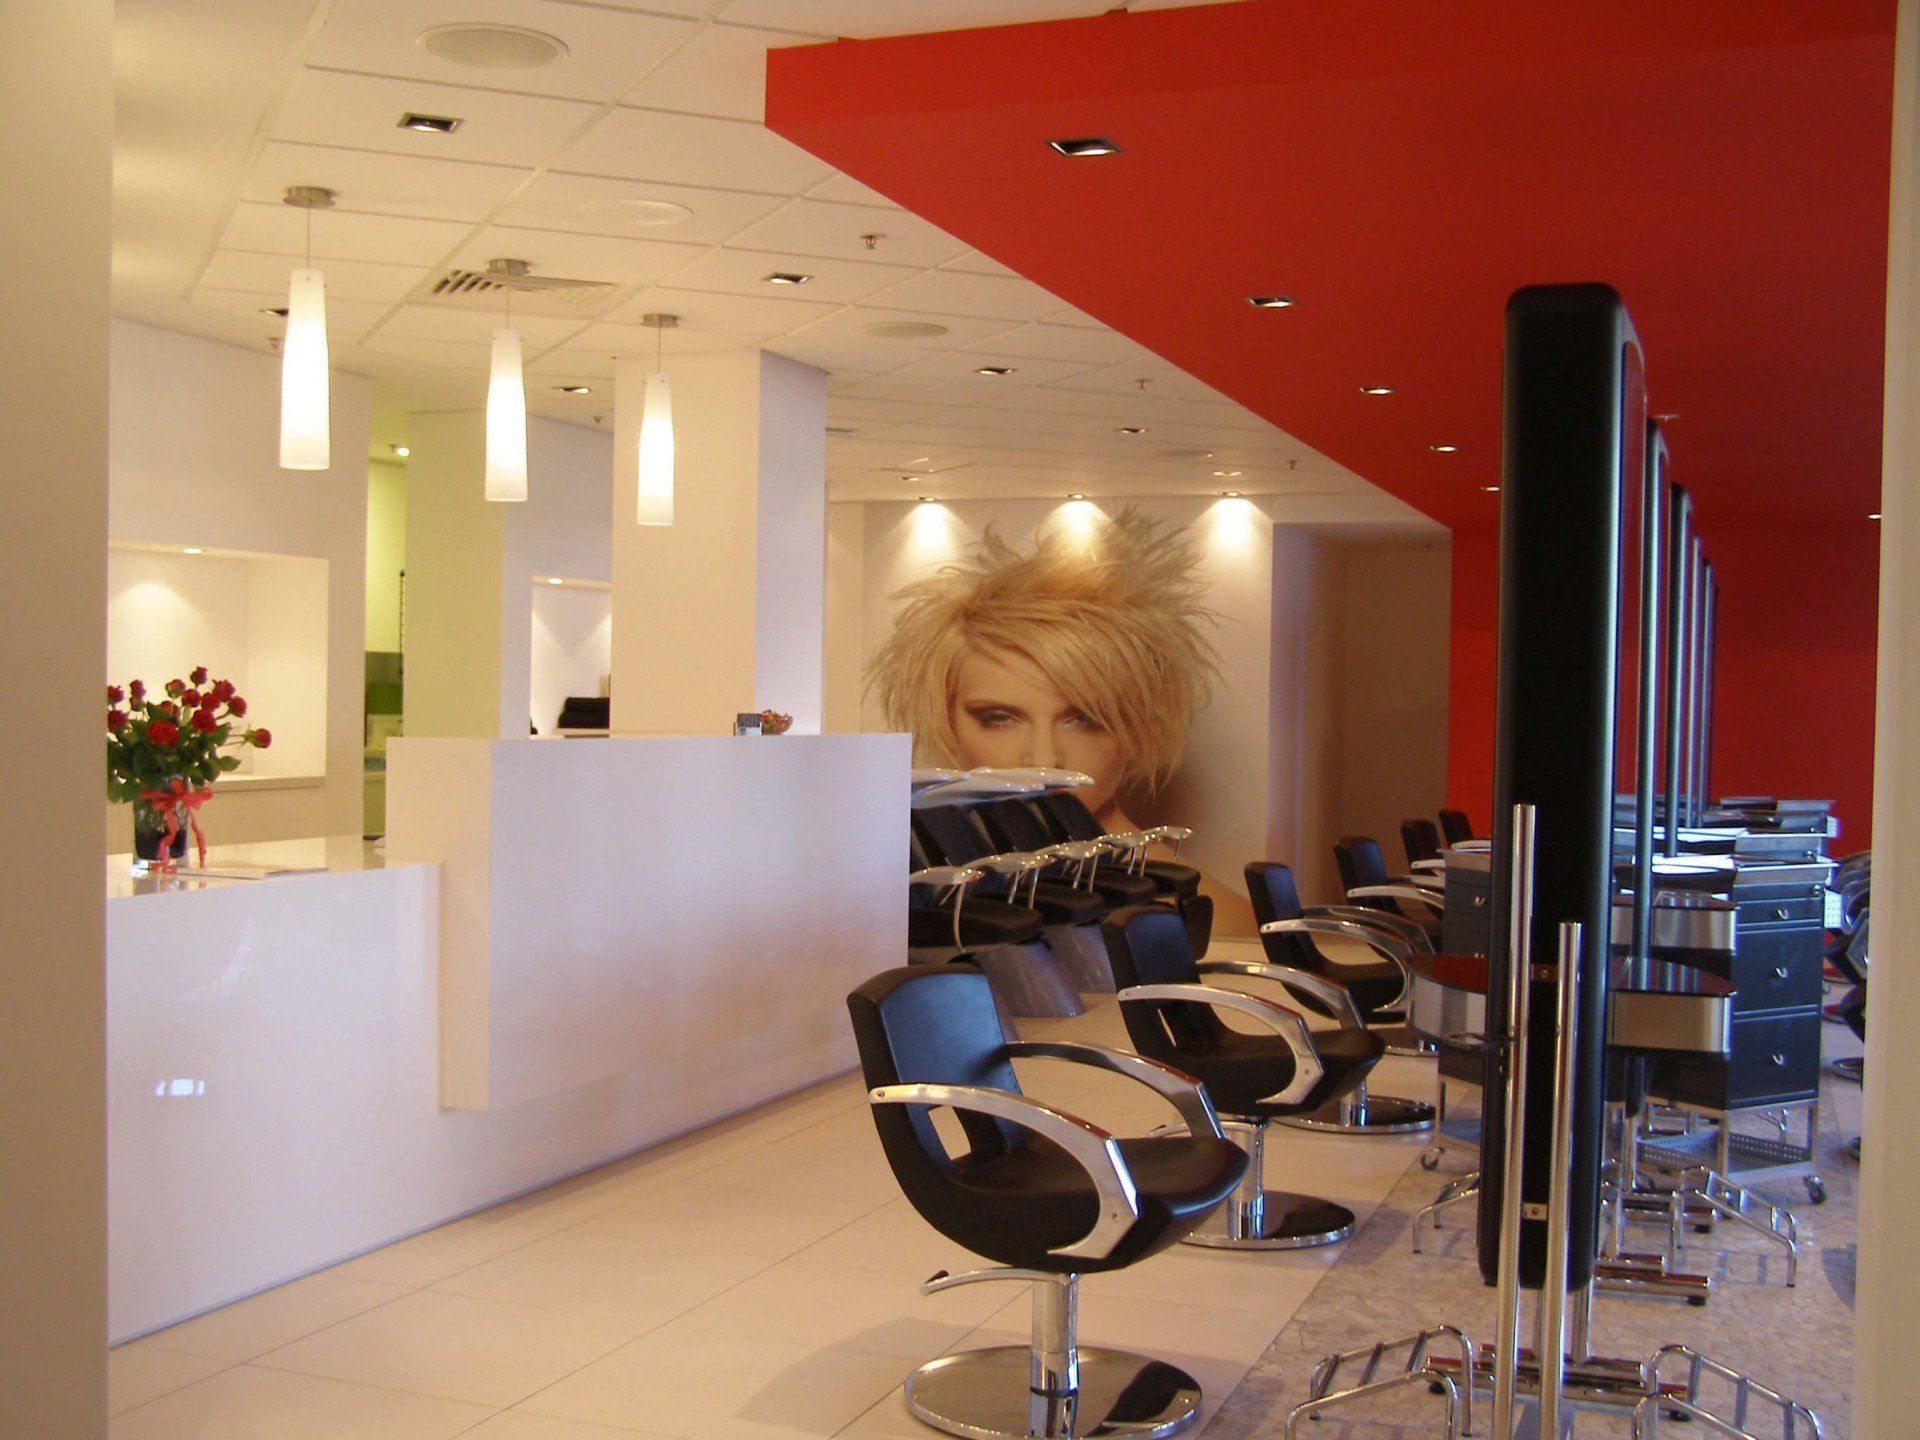 New Hair salon building designs in Mounties